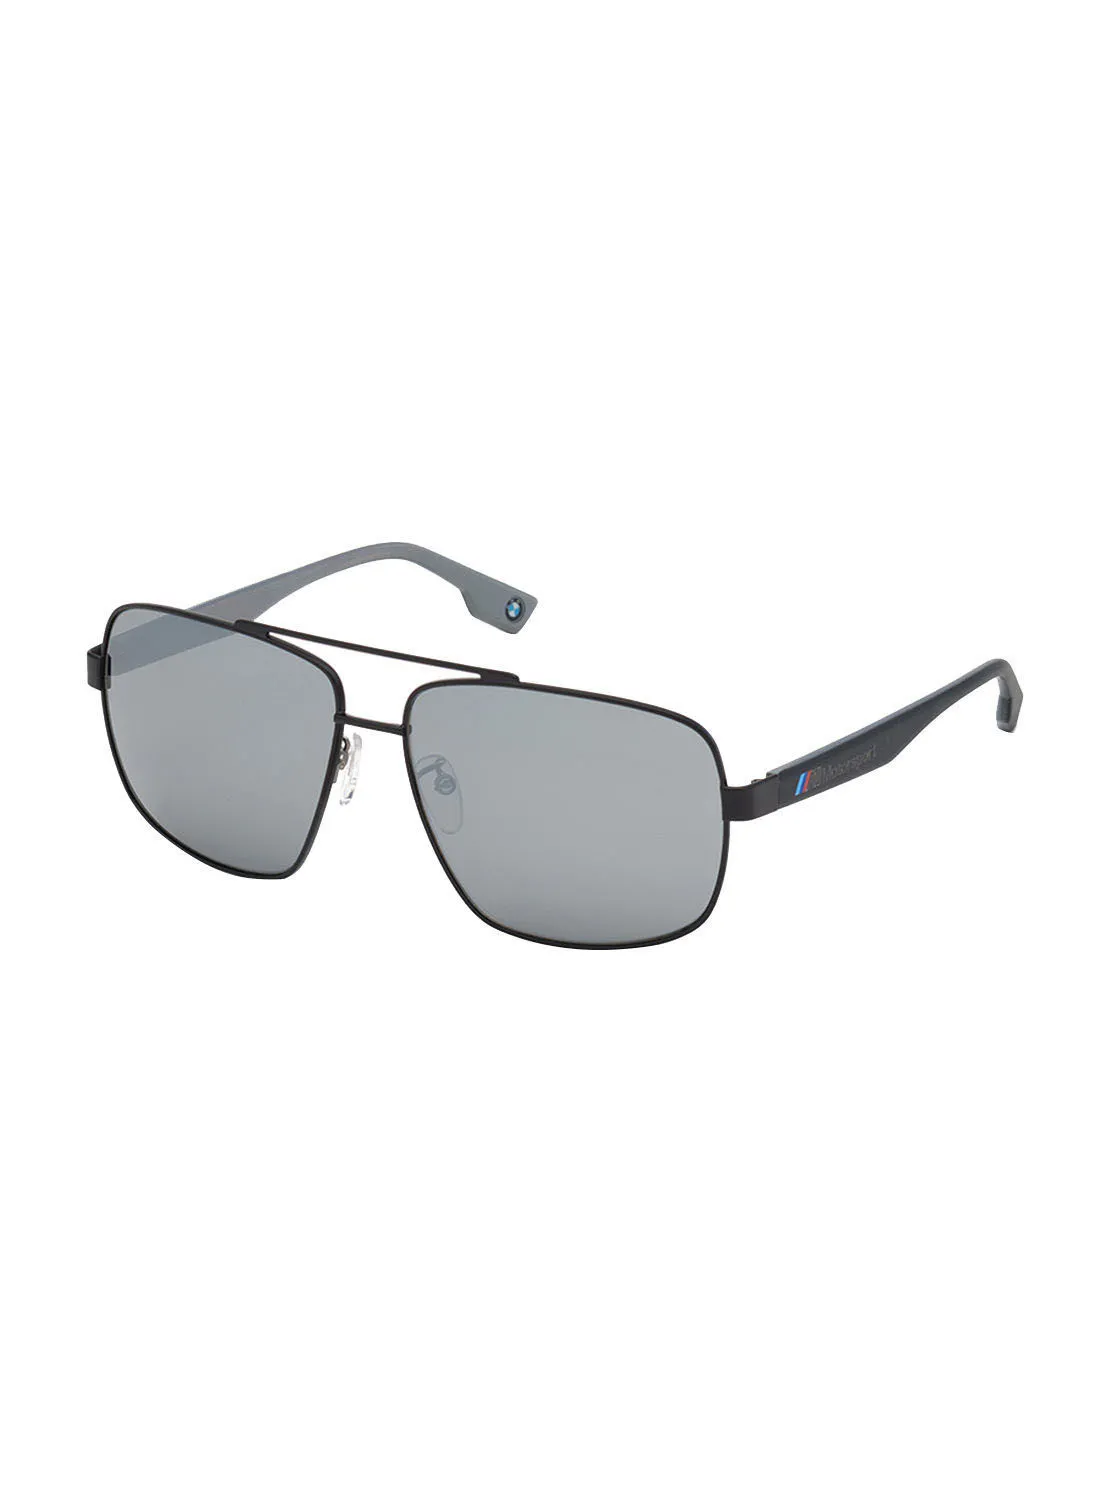 BMW Men's Sunglasses BS000205C61